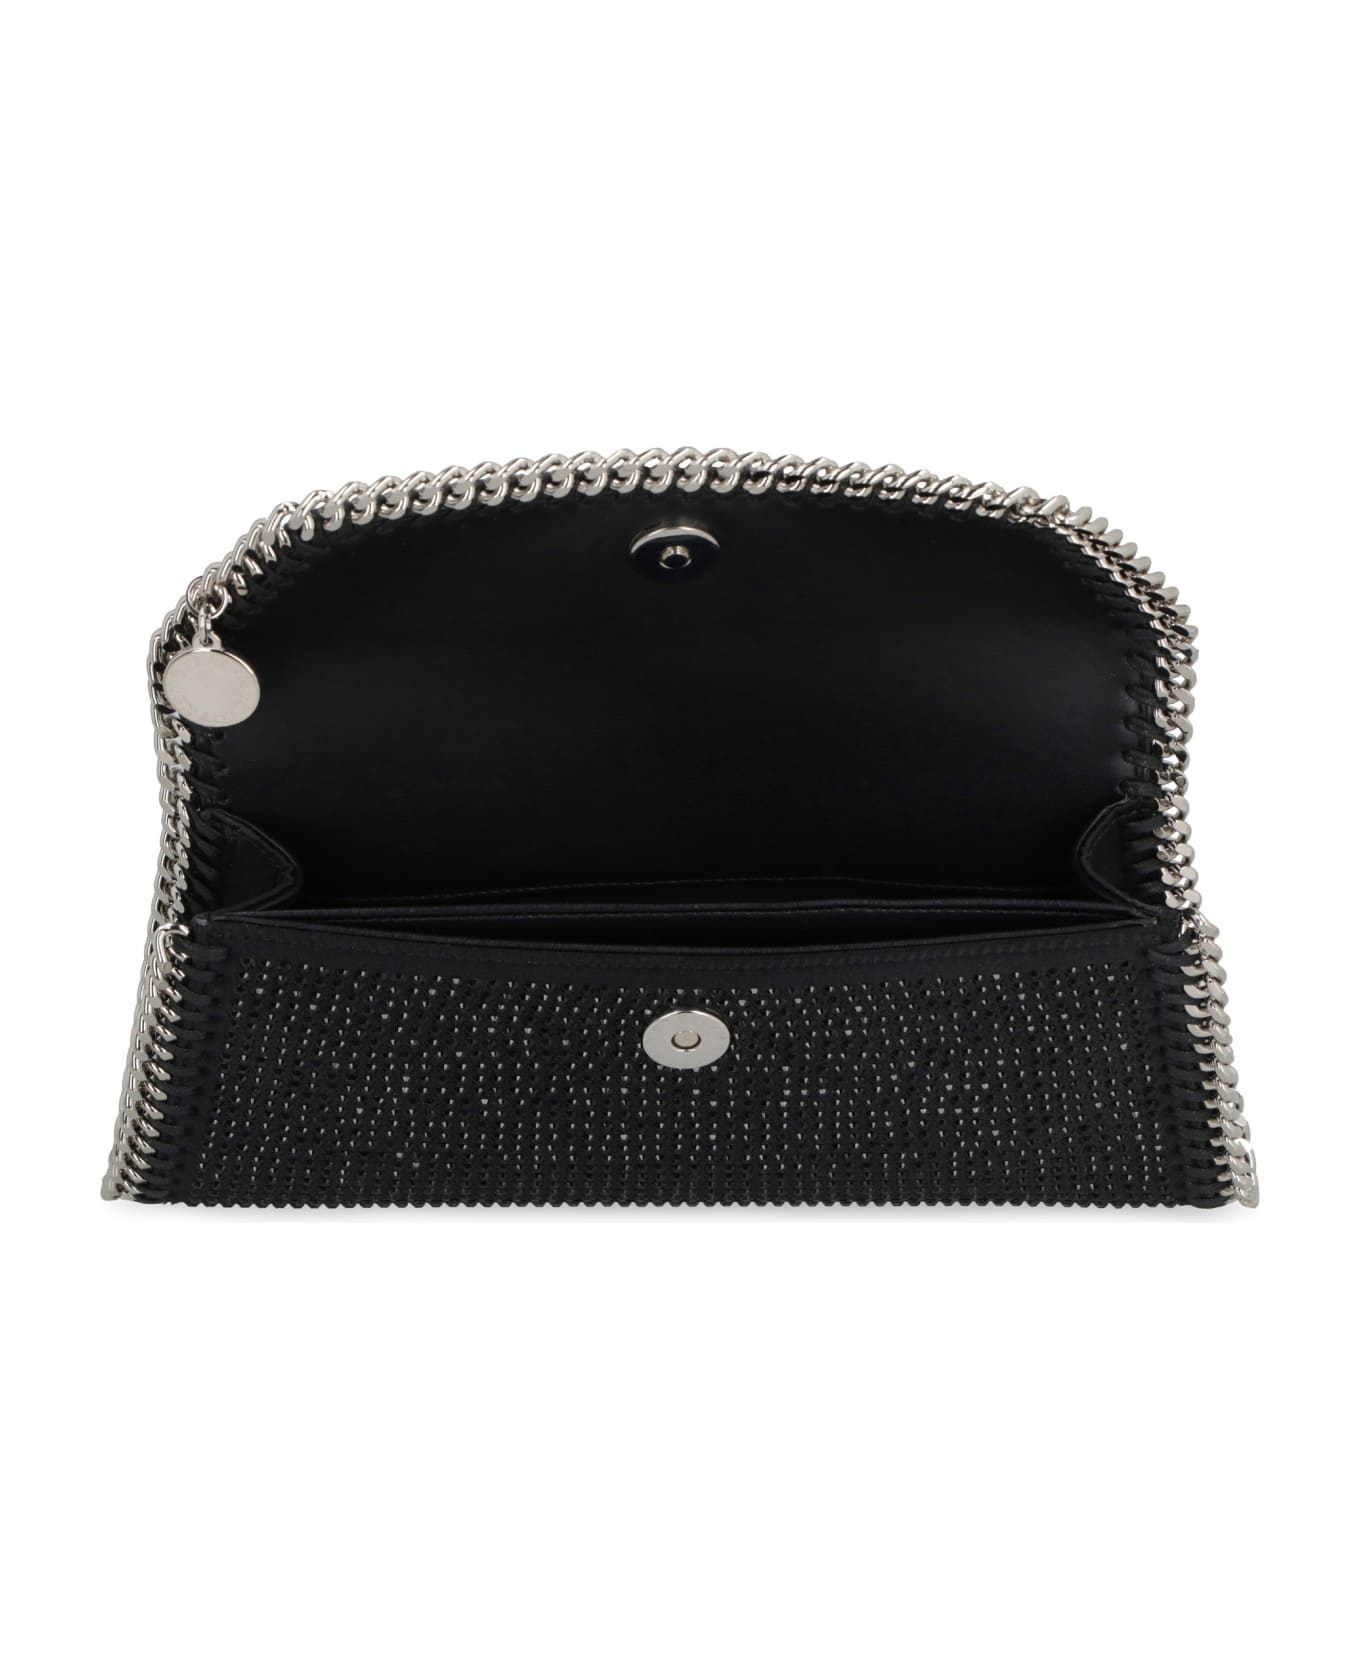 Stella McCartney Falabella Embellished Clutch Bag - black